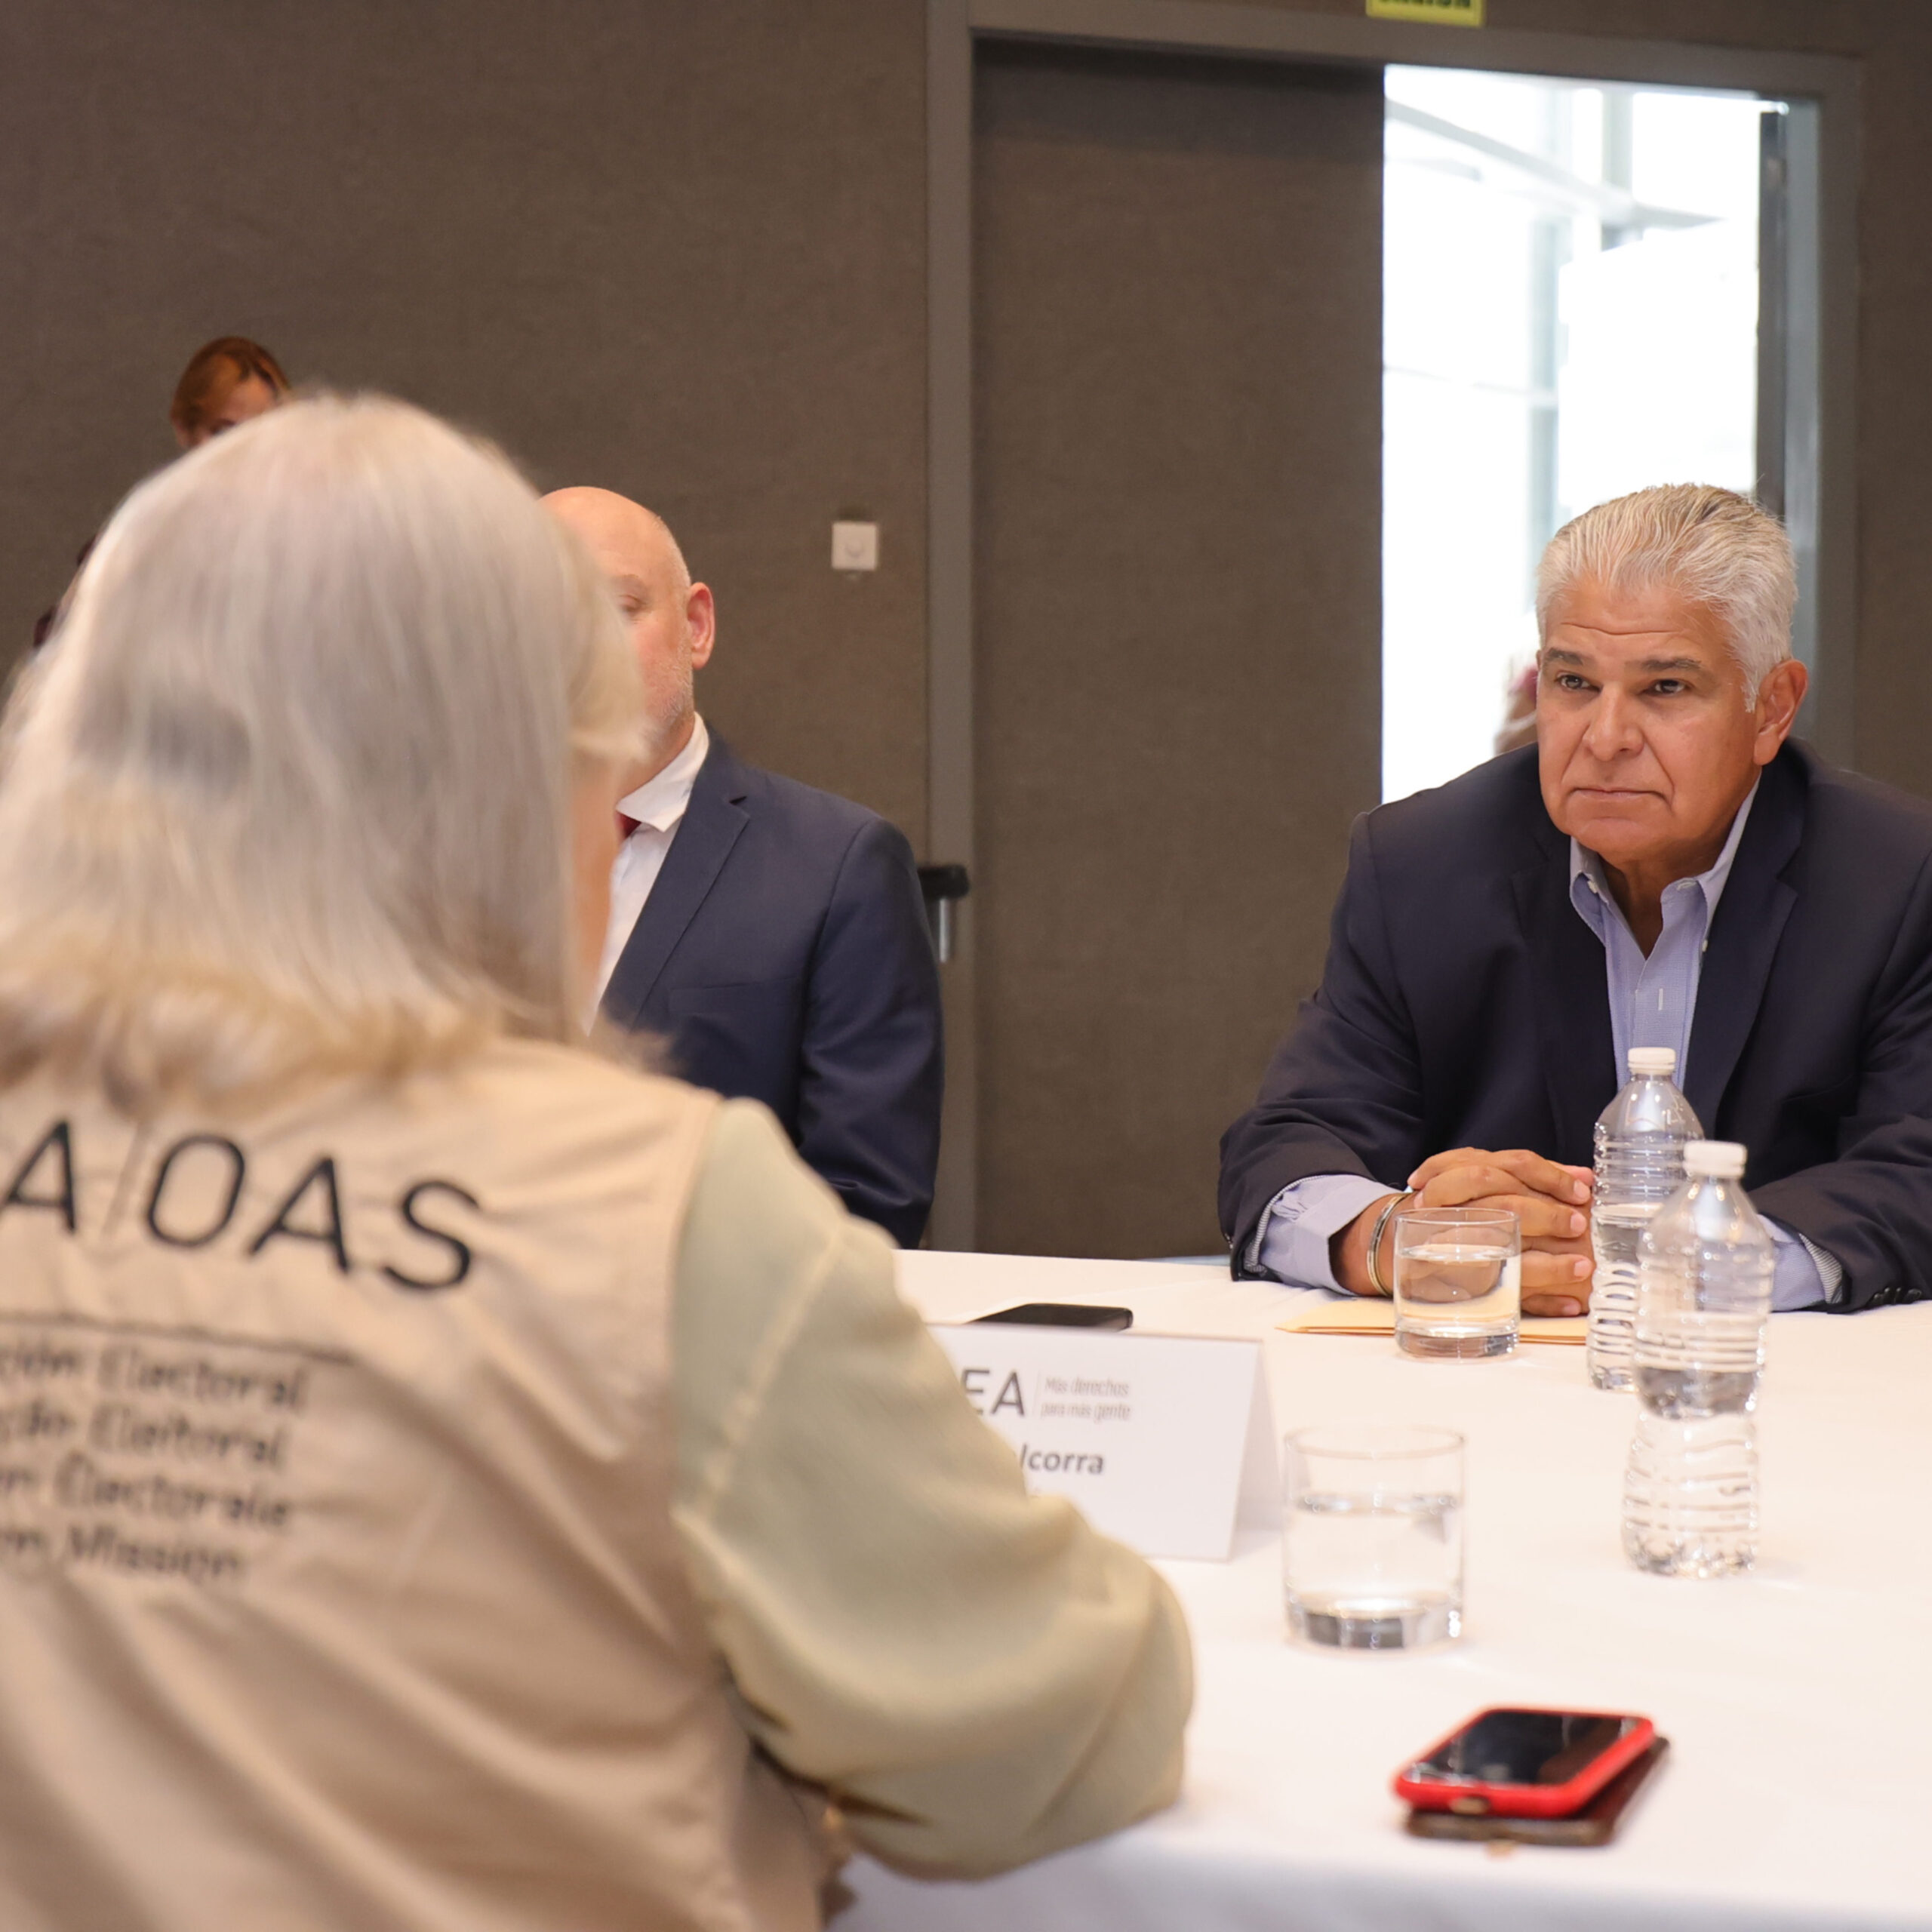 OEA reconoce a Mulino como candidato presidencial